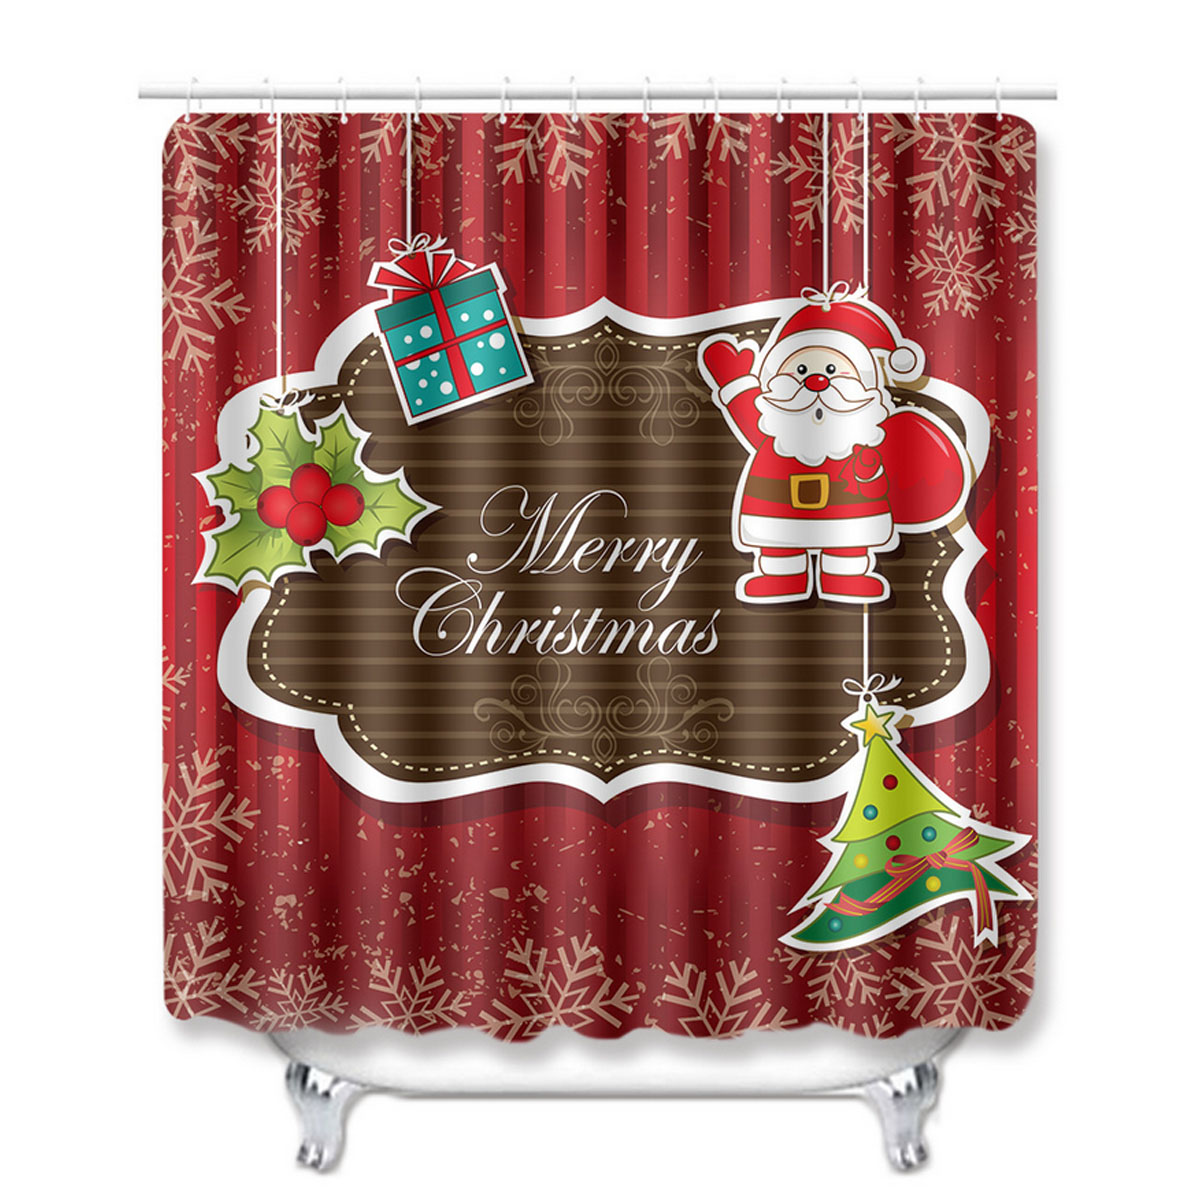 Christmas-Santa-Claus-Waterproof-Shower-Curtain-Set-Bath-Mat-Set-Toilet-Cover-1591262-3